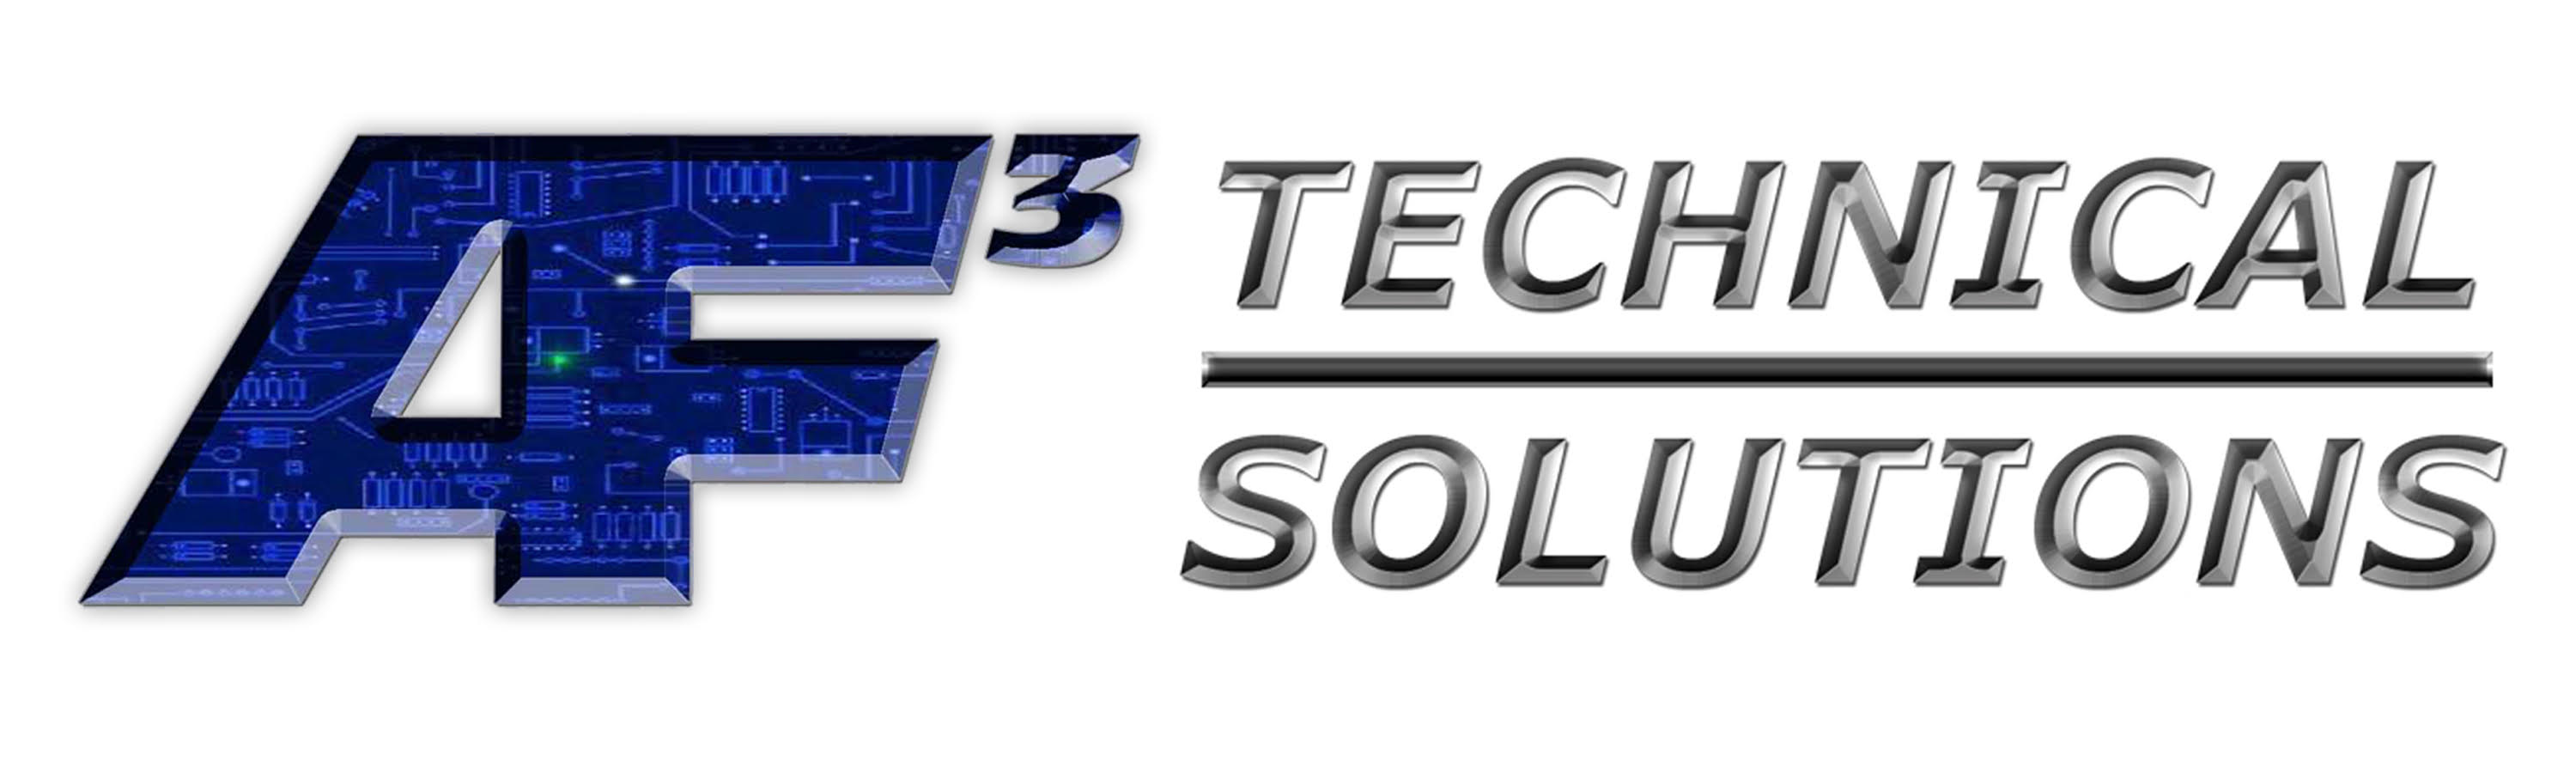 AF3 Technical Solutions